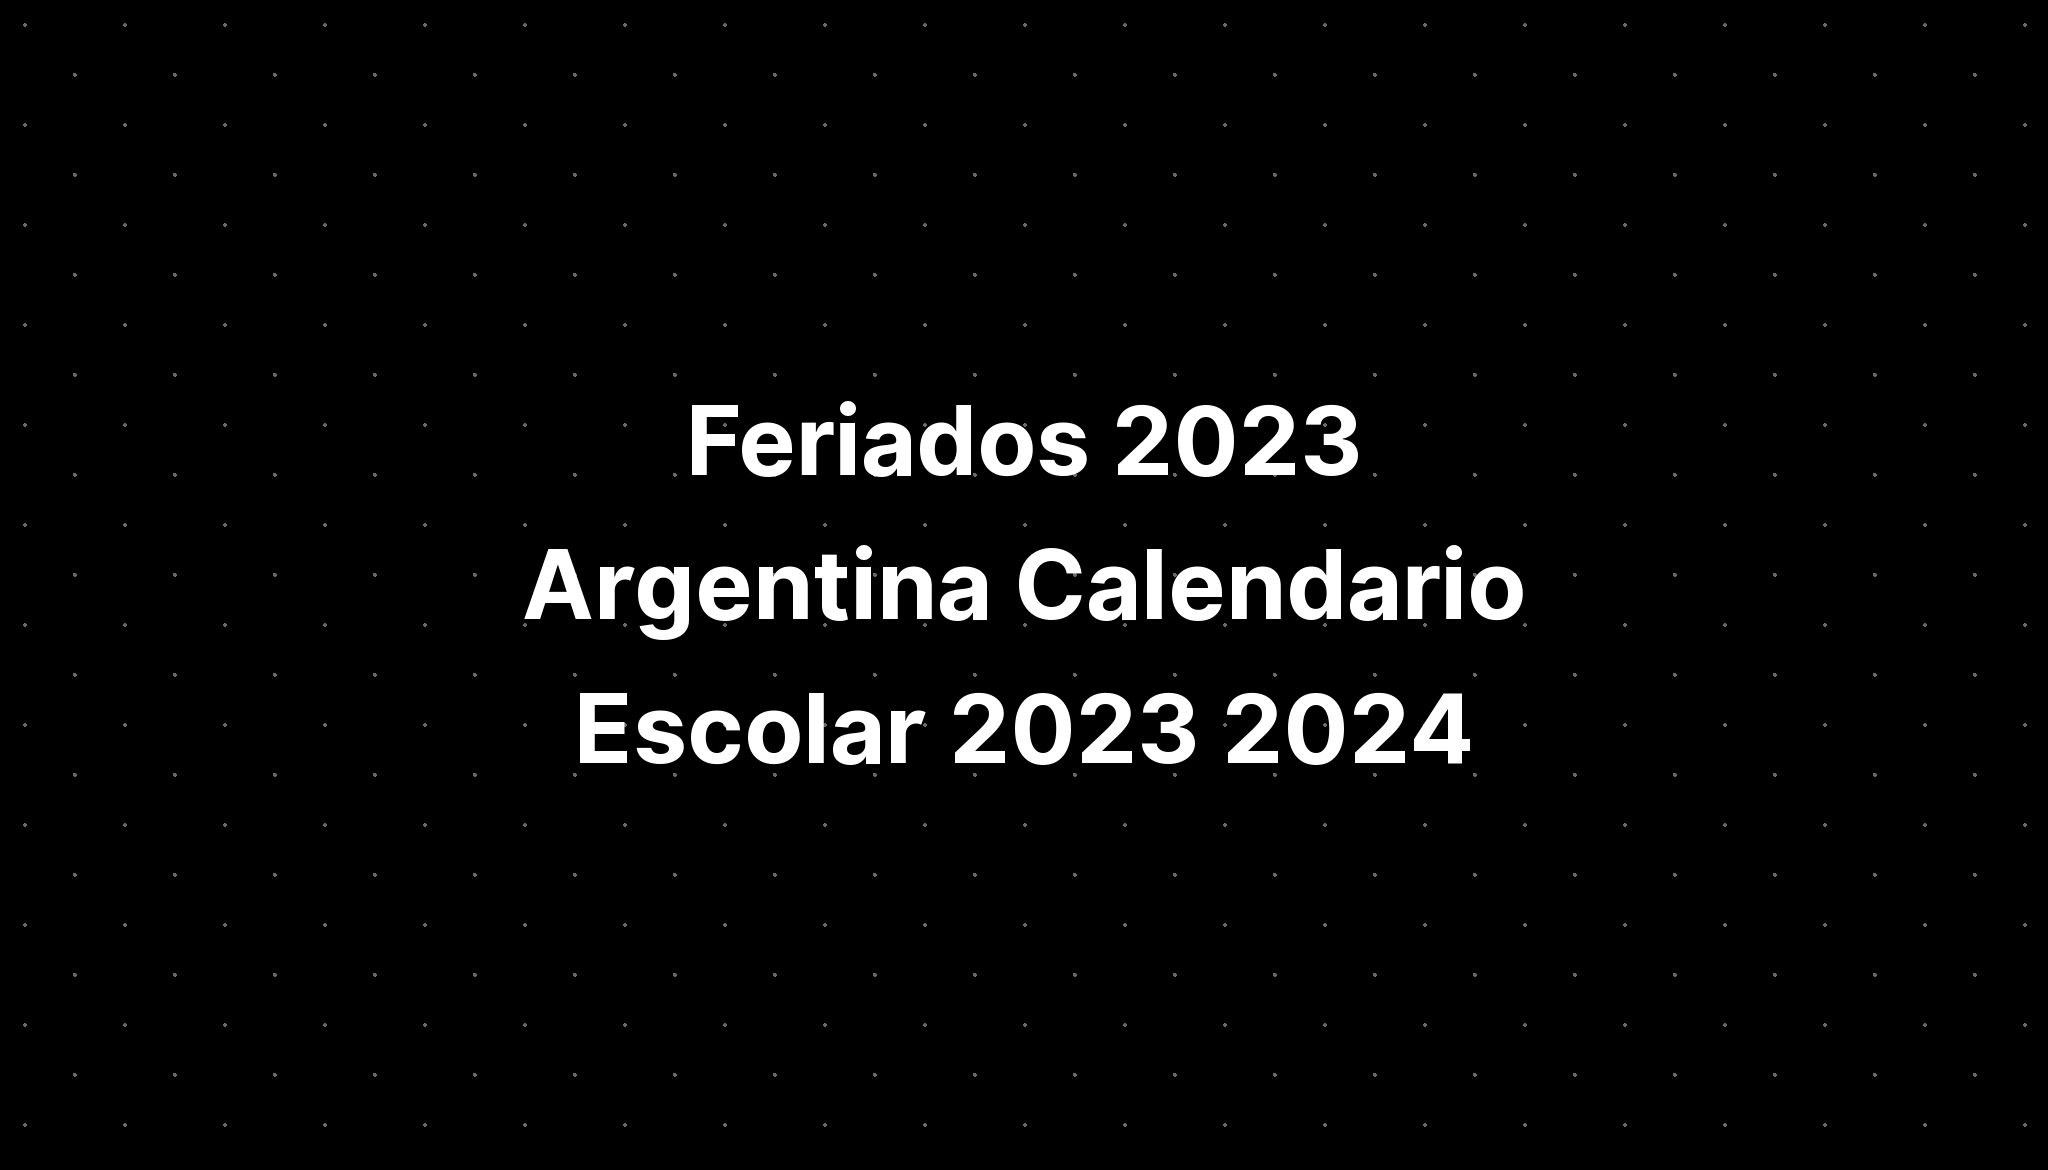 Feriados 2023 Argentina Calendario Escolar 2023 2024 Imagesee 7728